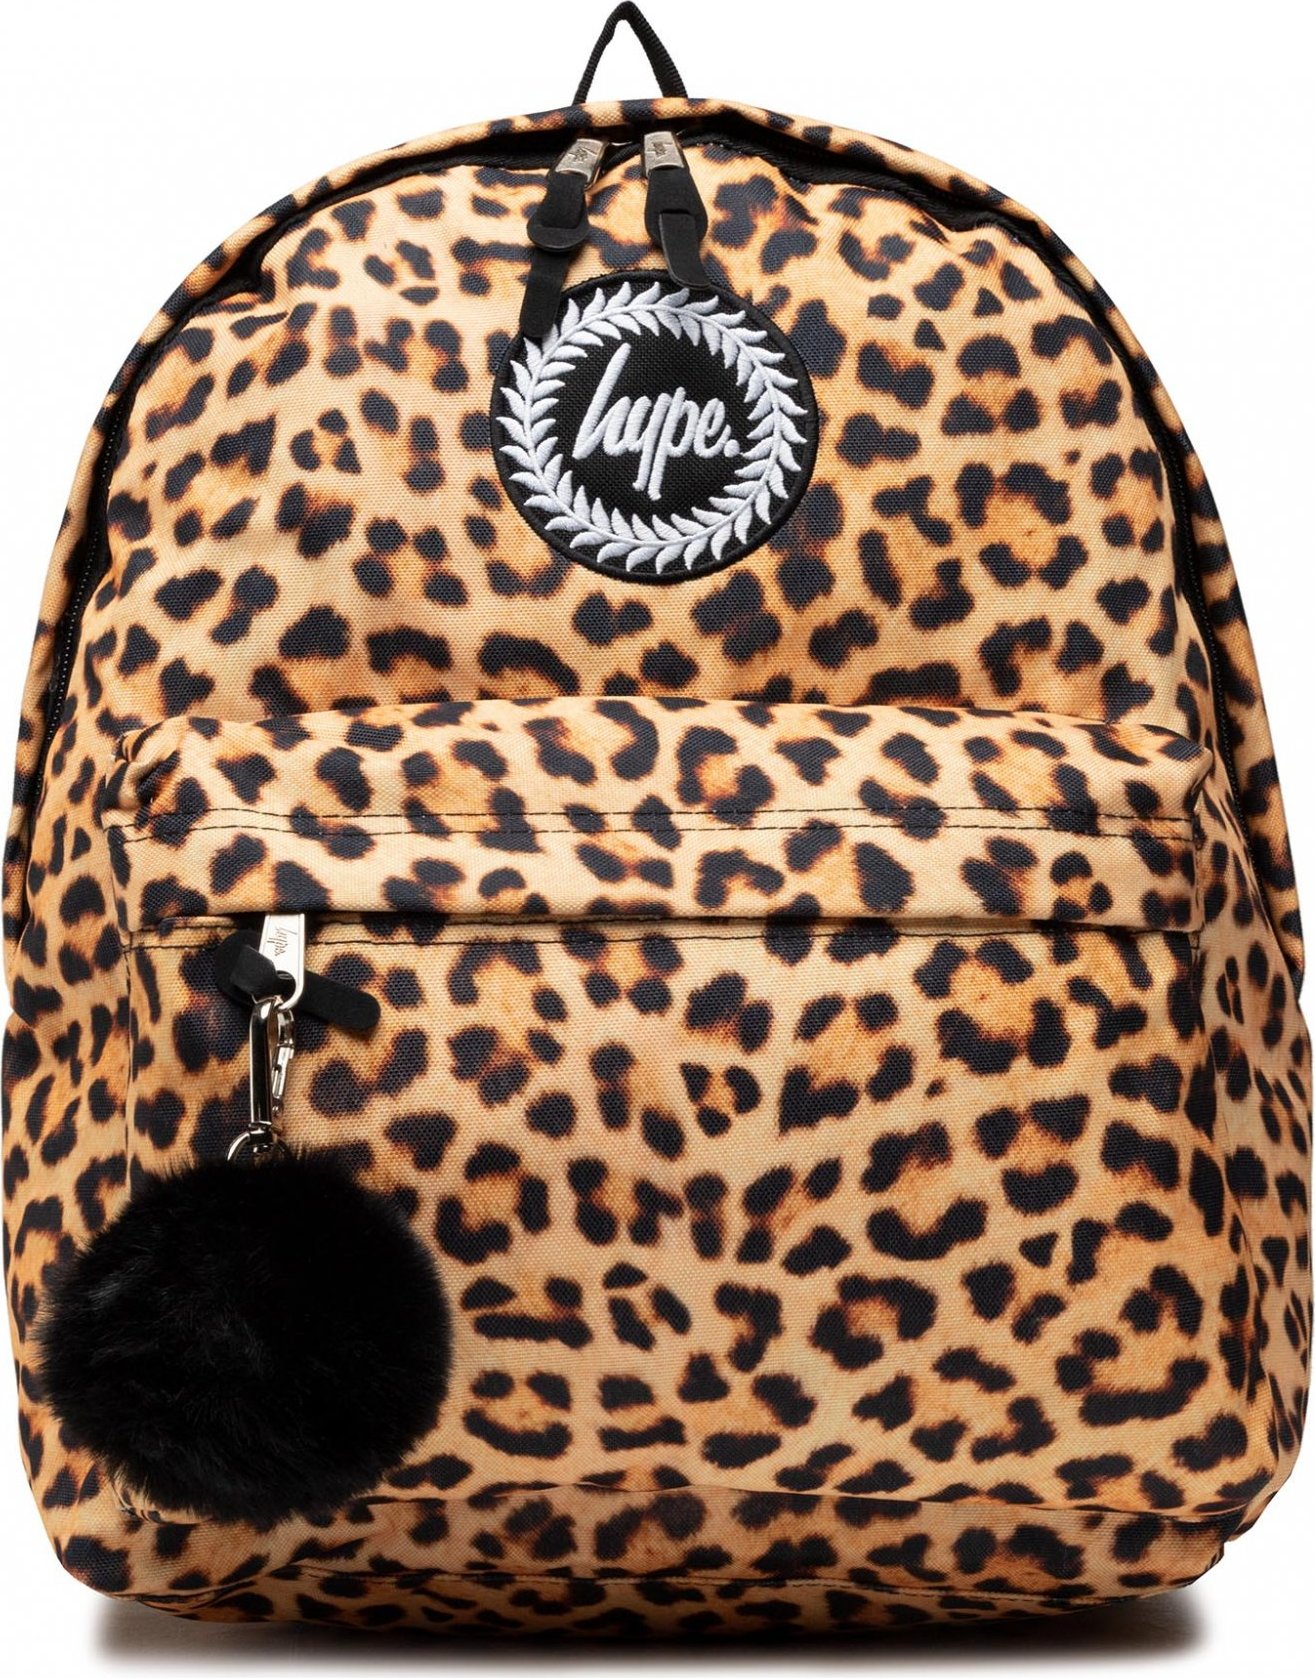 HYPE Leopard Pom Pom Backpack BTS19001